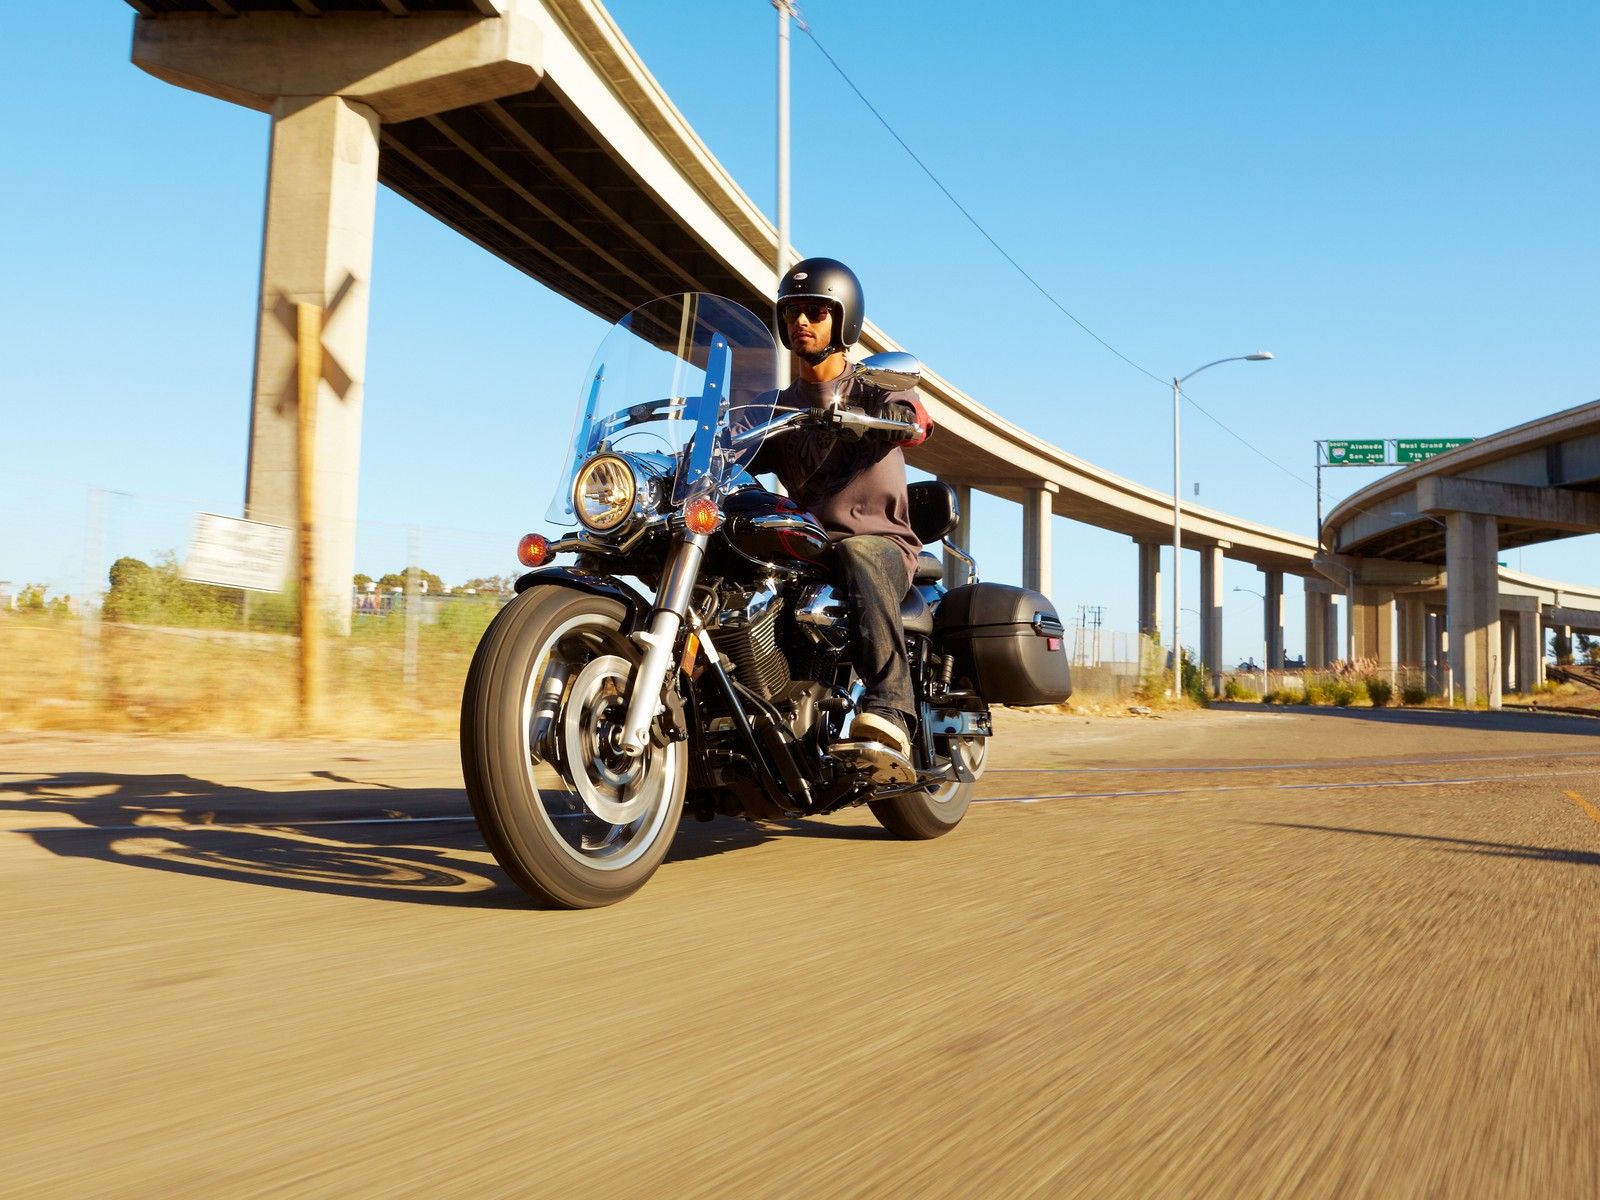 2013 Star Motorcycle V Star 950 Tourer